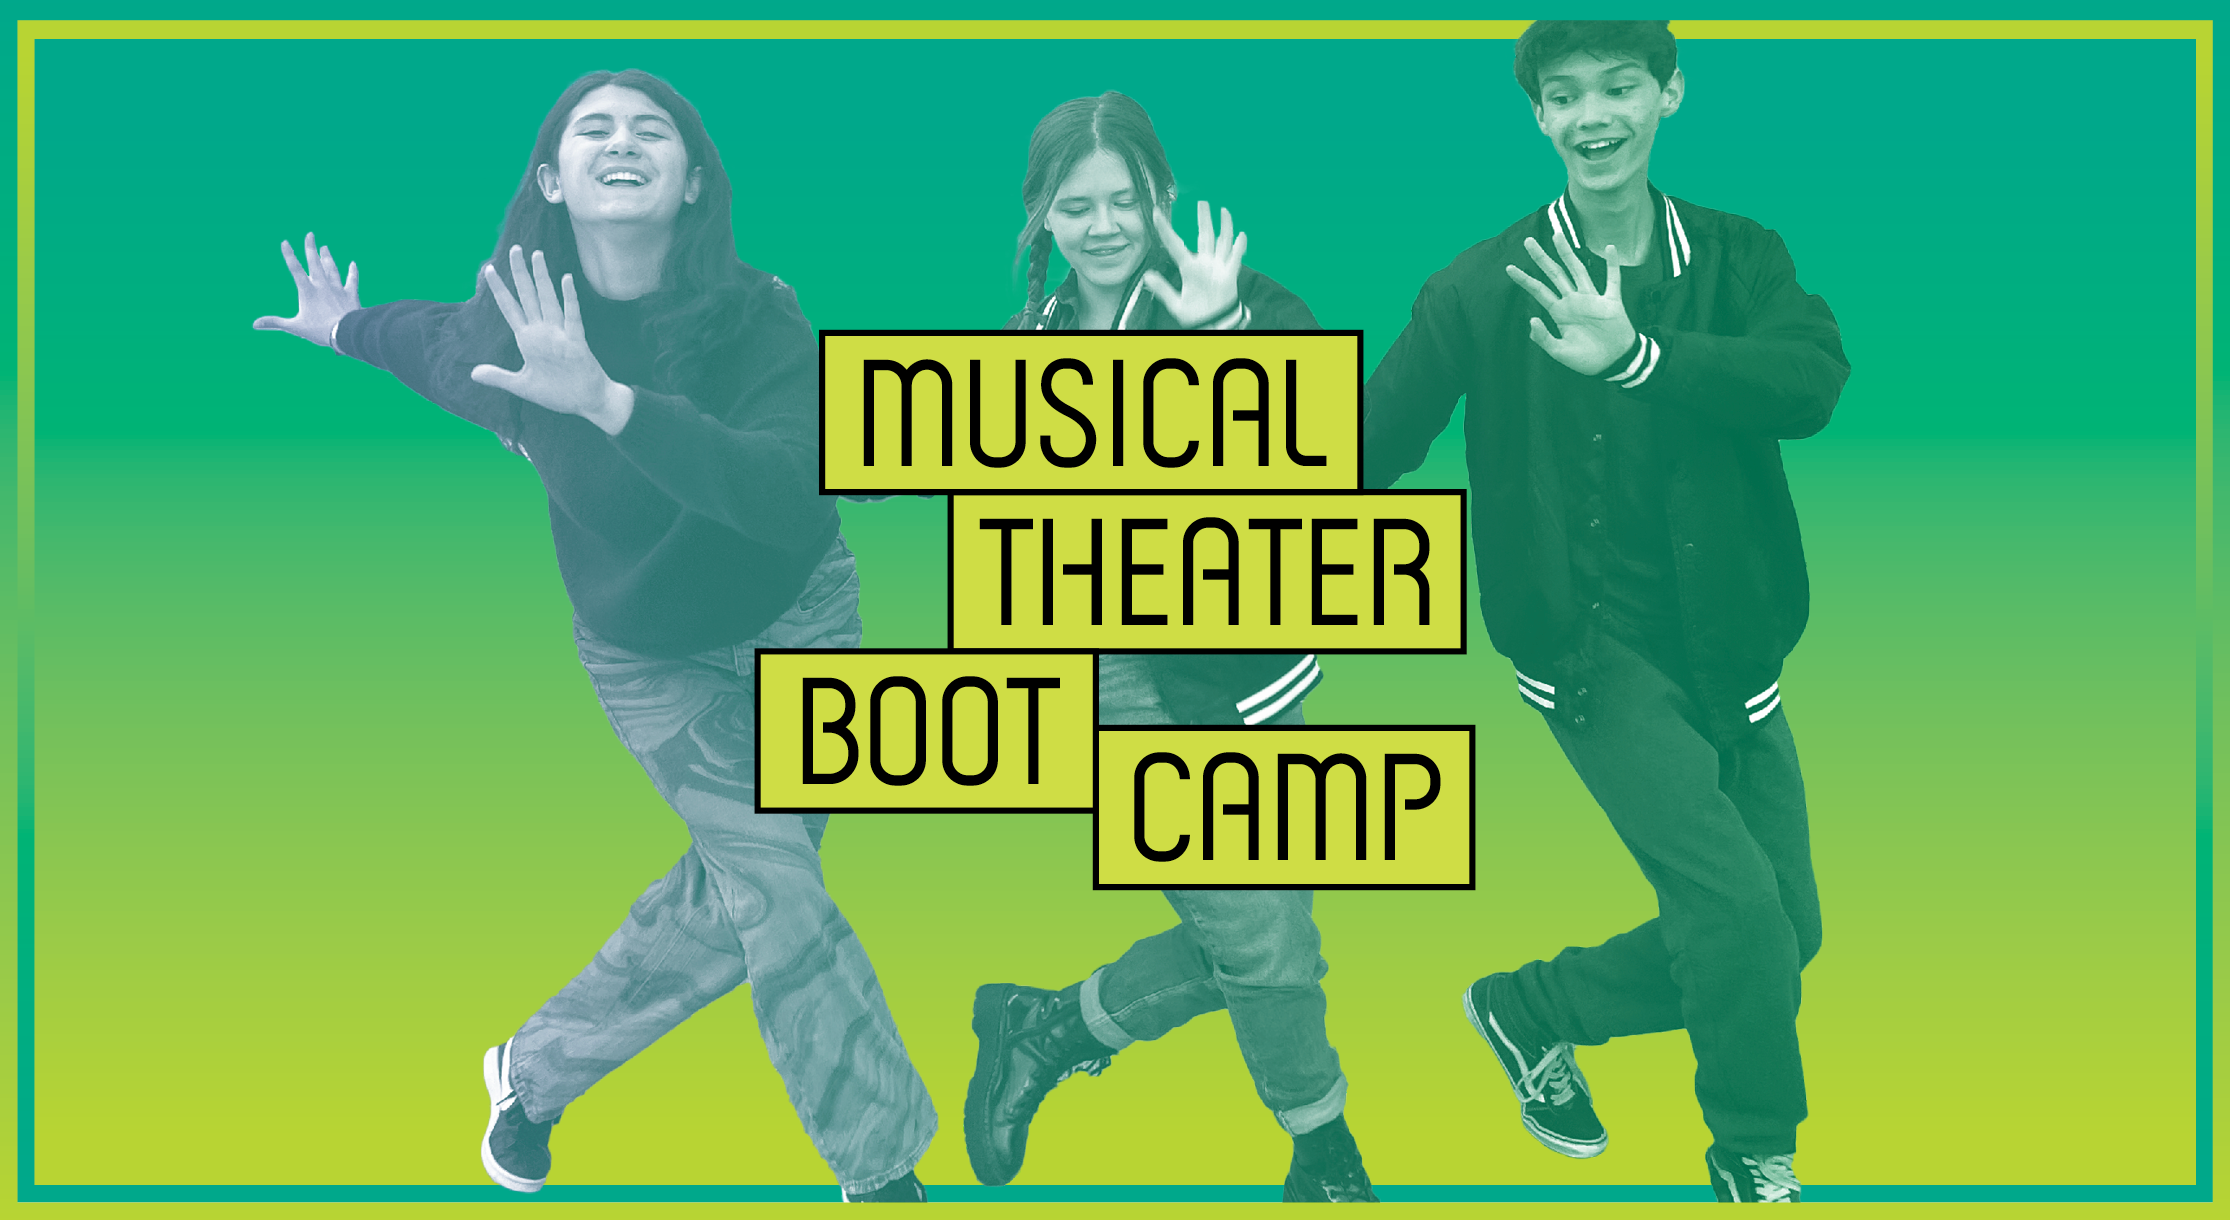 Musical Theater Boot Camp from July 17 — July 28 at Pasadena Playhouse